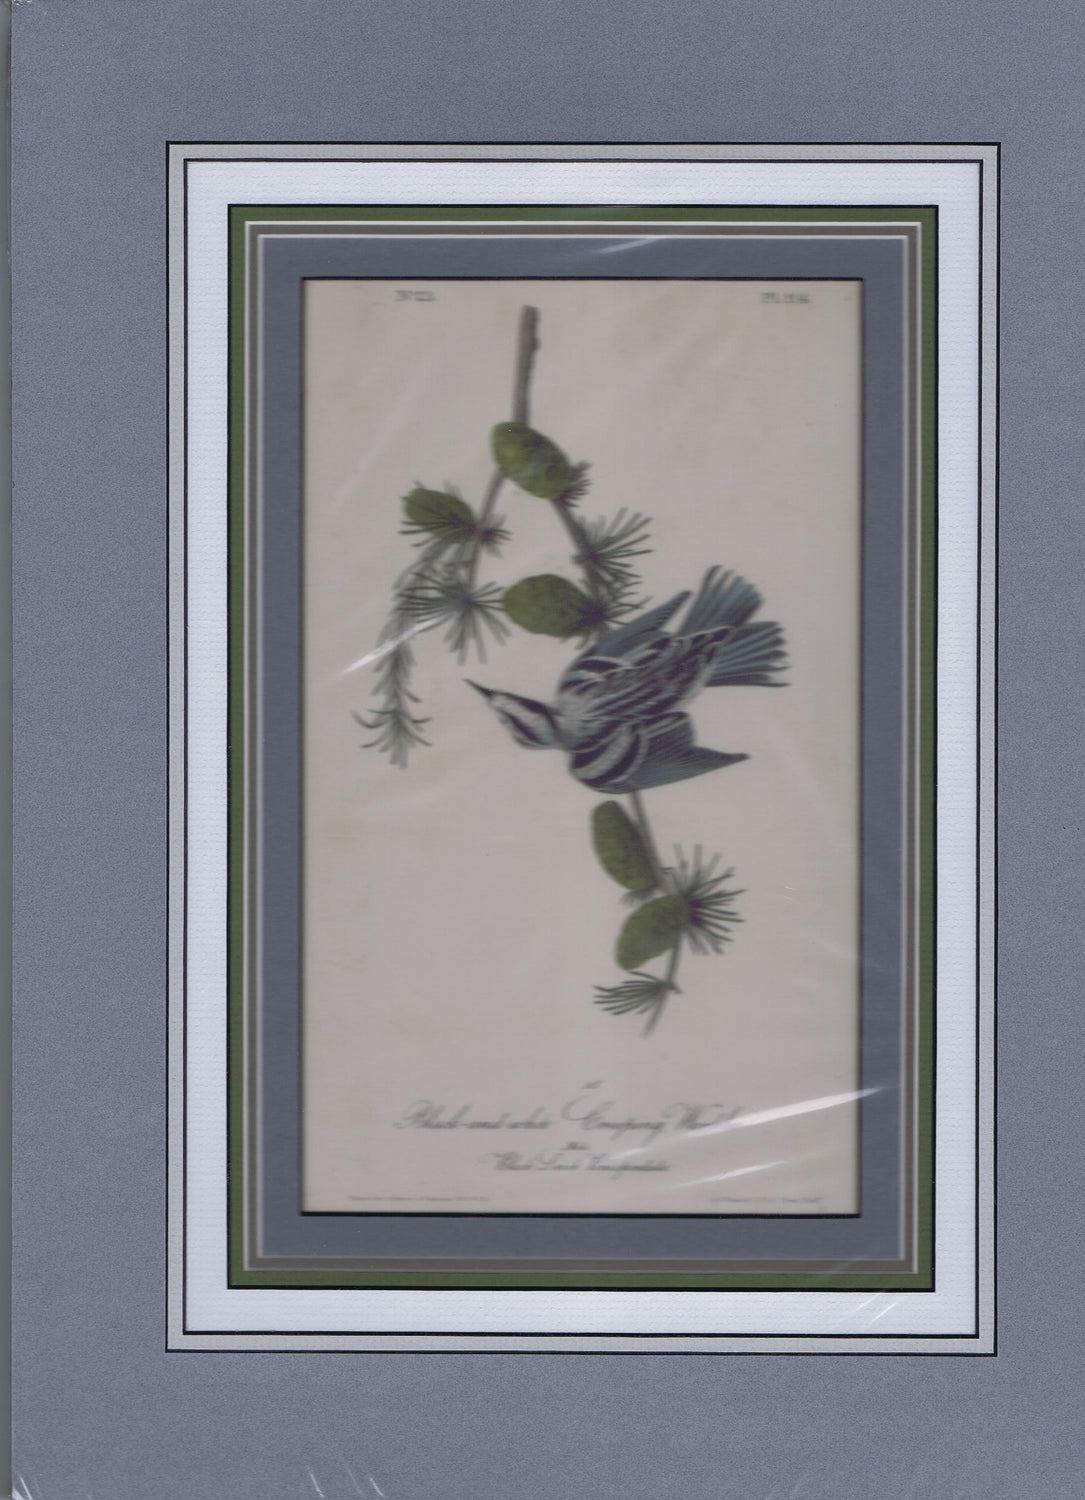 Audubon Original Octavo Matted, Black and White Creeping Warbler, plate 114